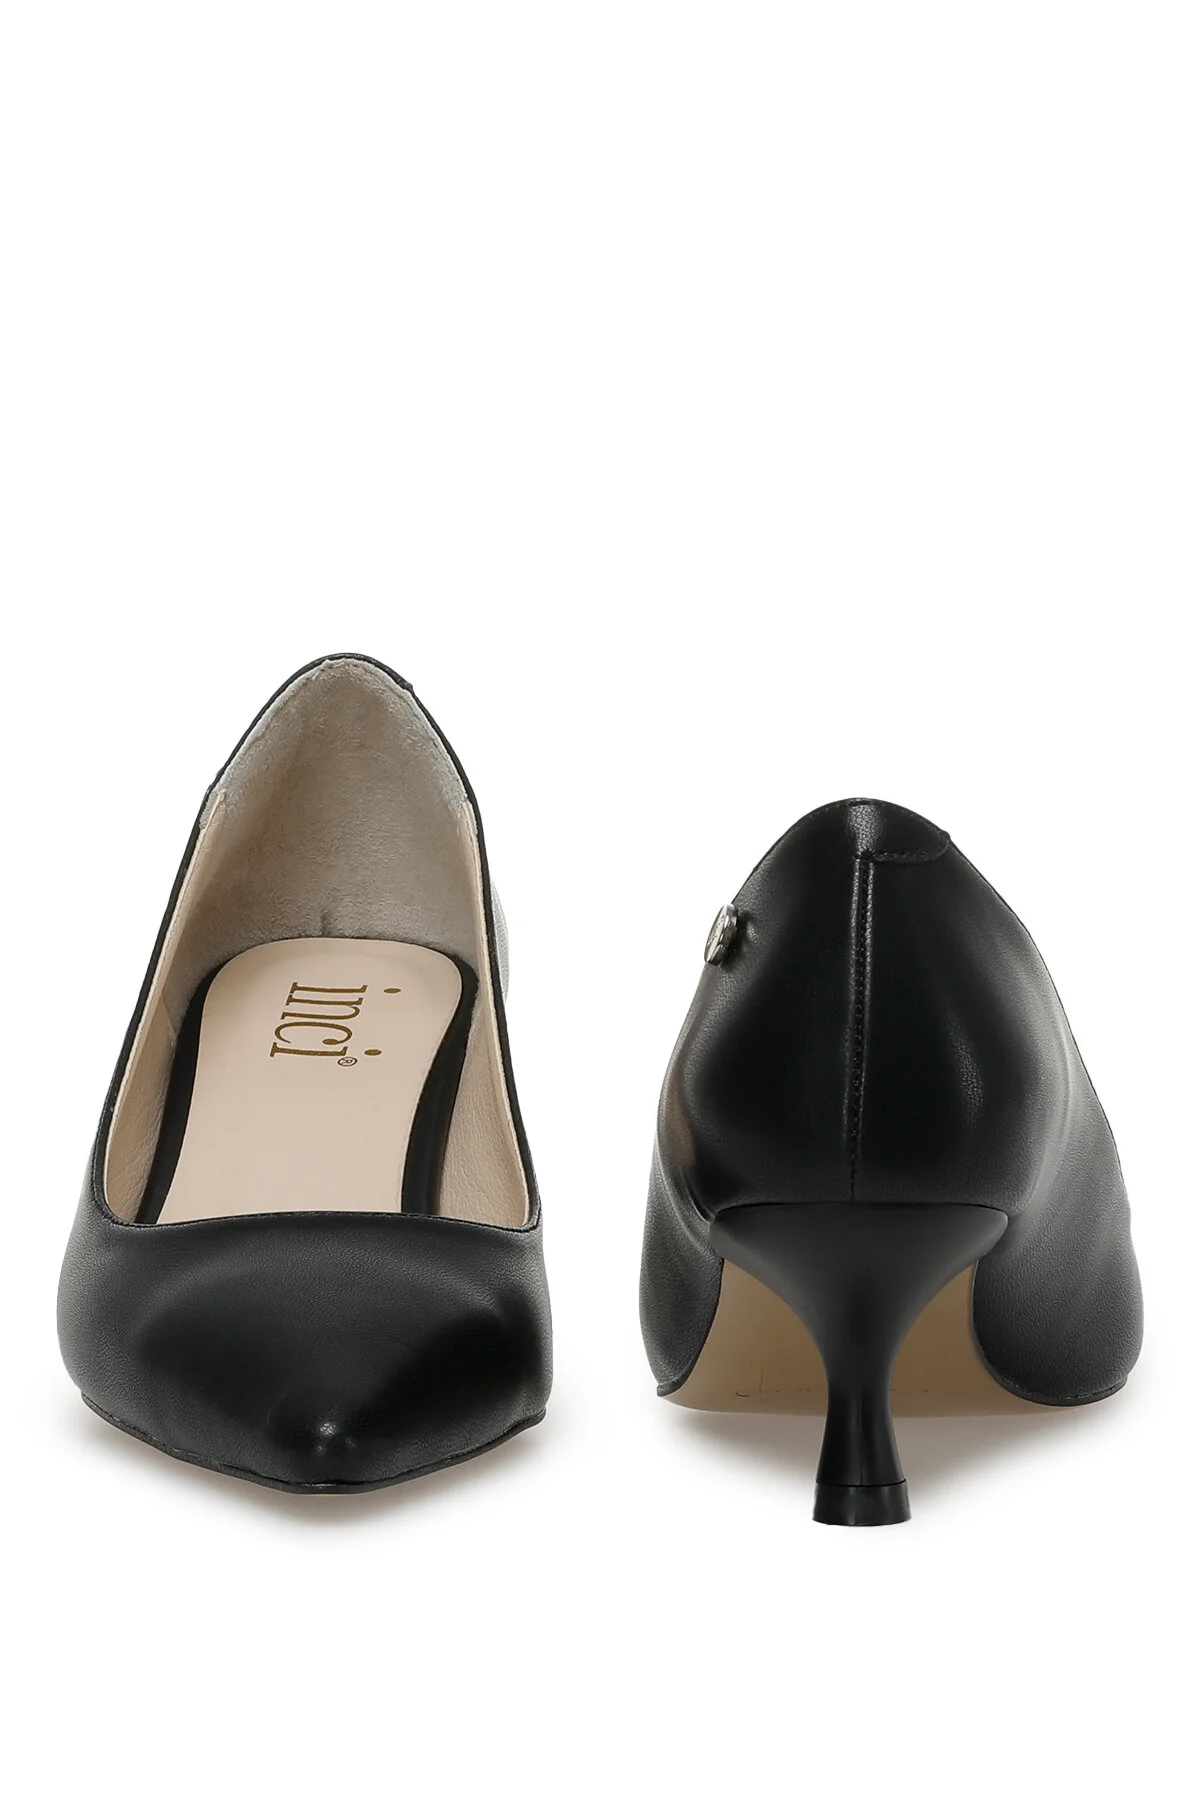 TRUDY 3FX Kadın Topuklu Ayakkabı-Siyah